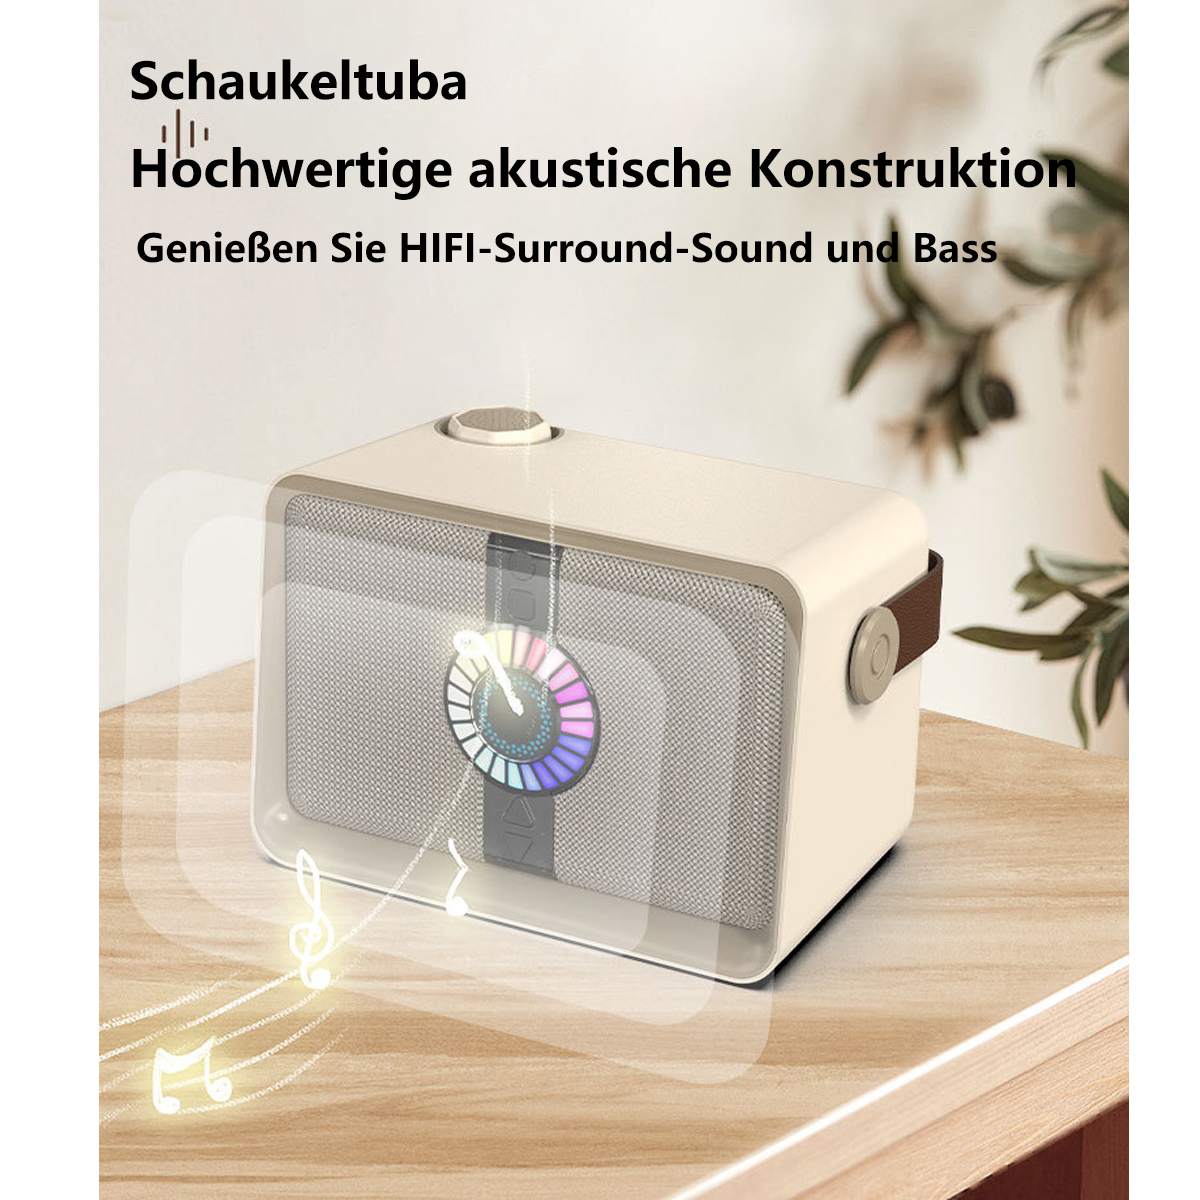 Grün Sound Praxis Bluetooth-Lautsprecher, ENBAOXIN Drahtloses Drahtloser Mikrofon Bluetooth-Lautsprecher Lautsprecher Grün